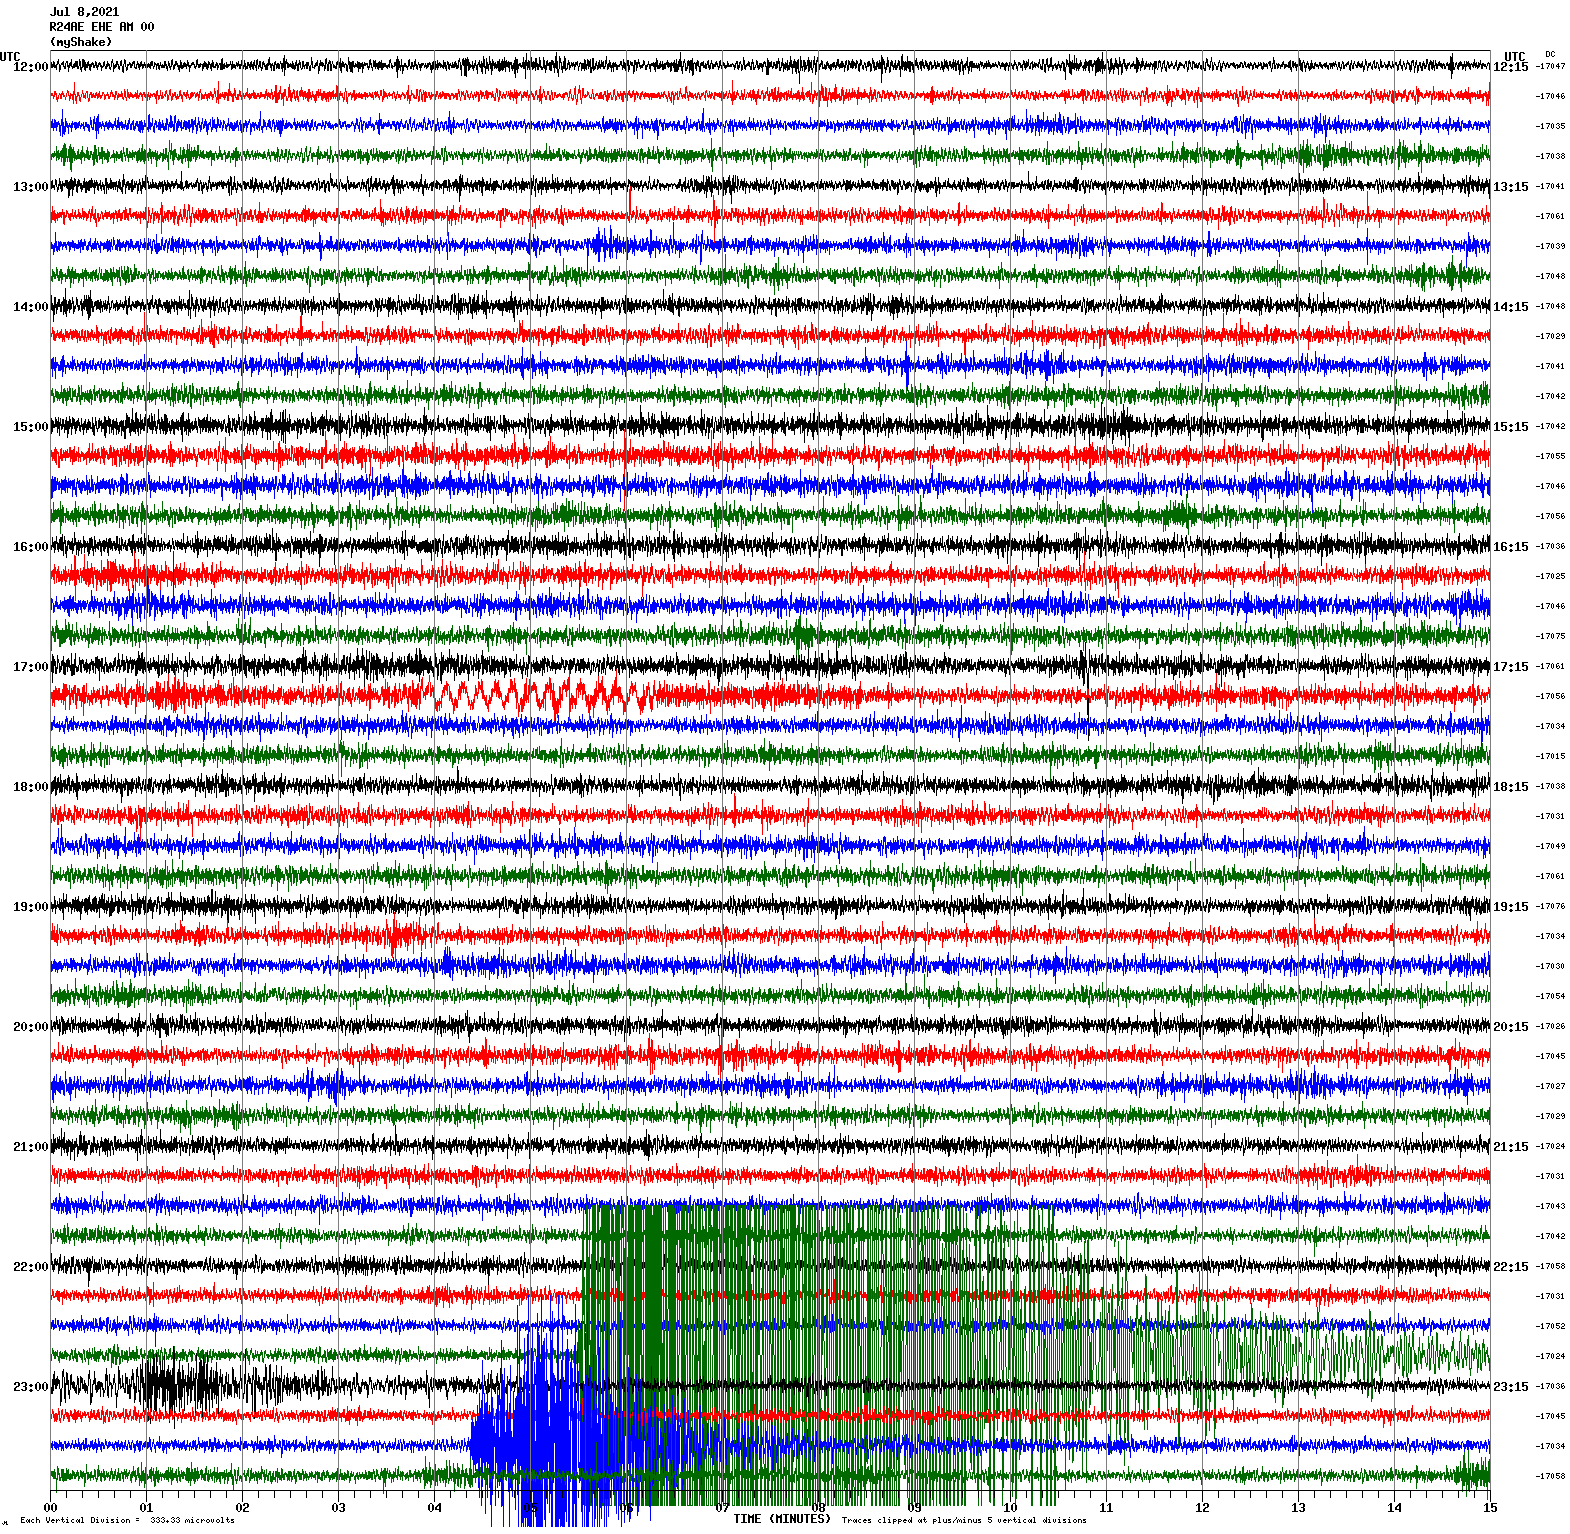 /seismic-data/R24AE/R24AE_EHE_AM_00.2021070812.gif